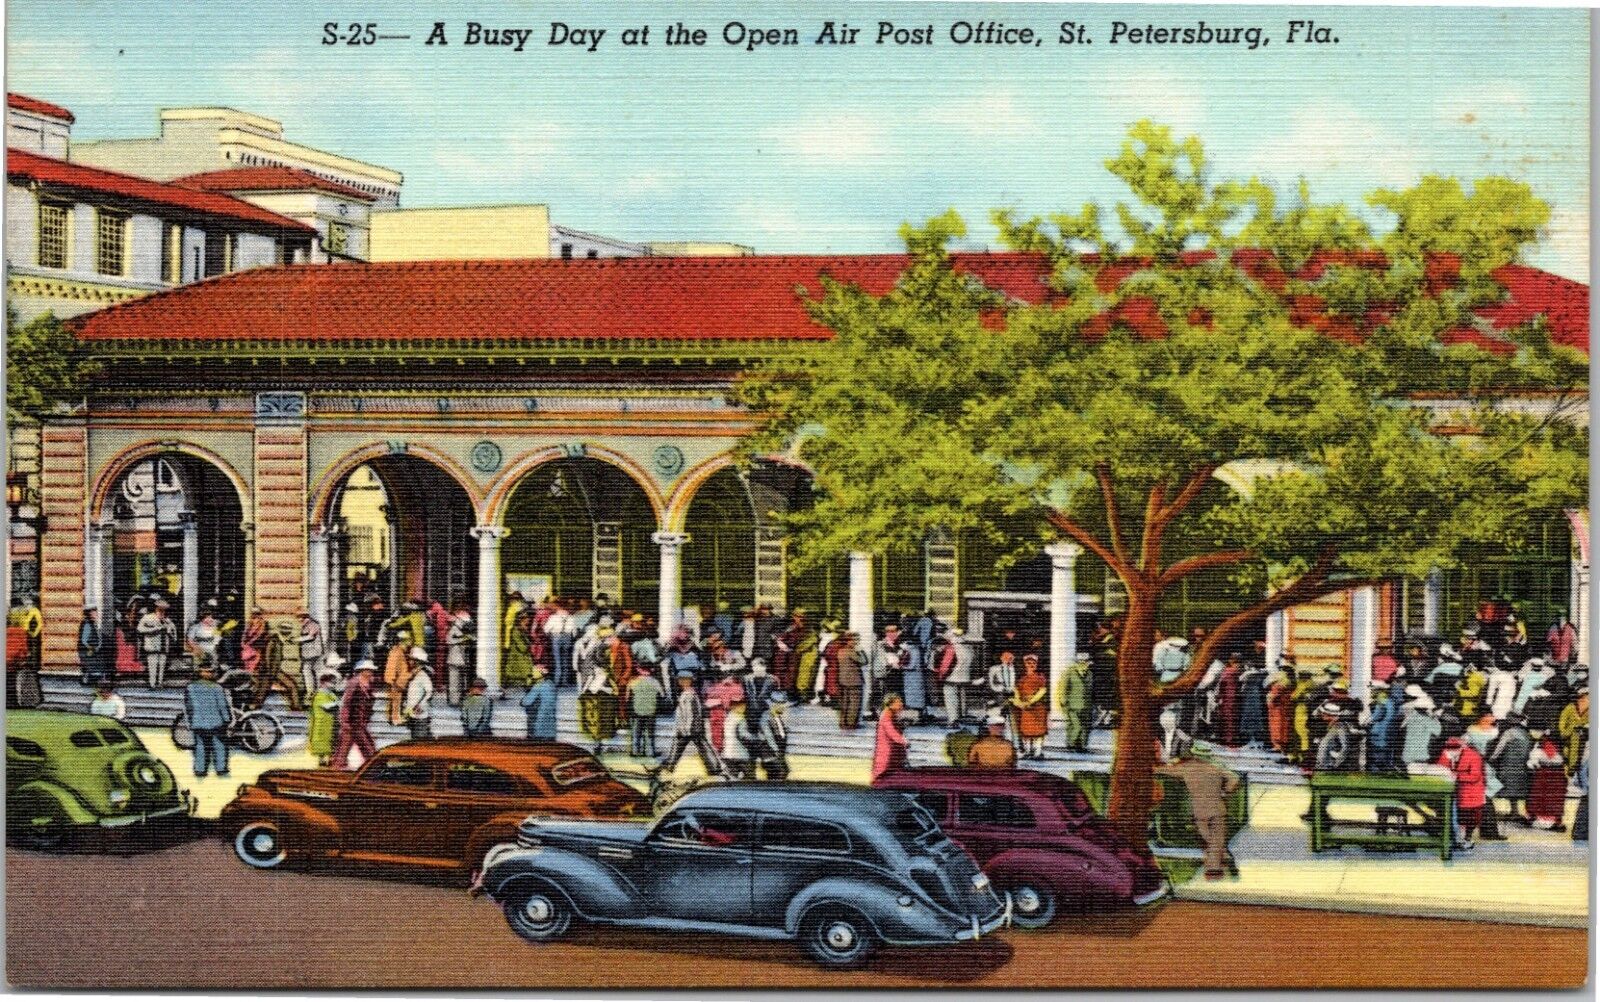 Open Air Post Office, St. Petersburg, Florida